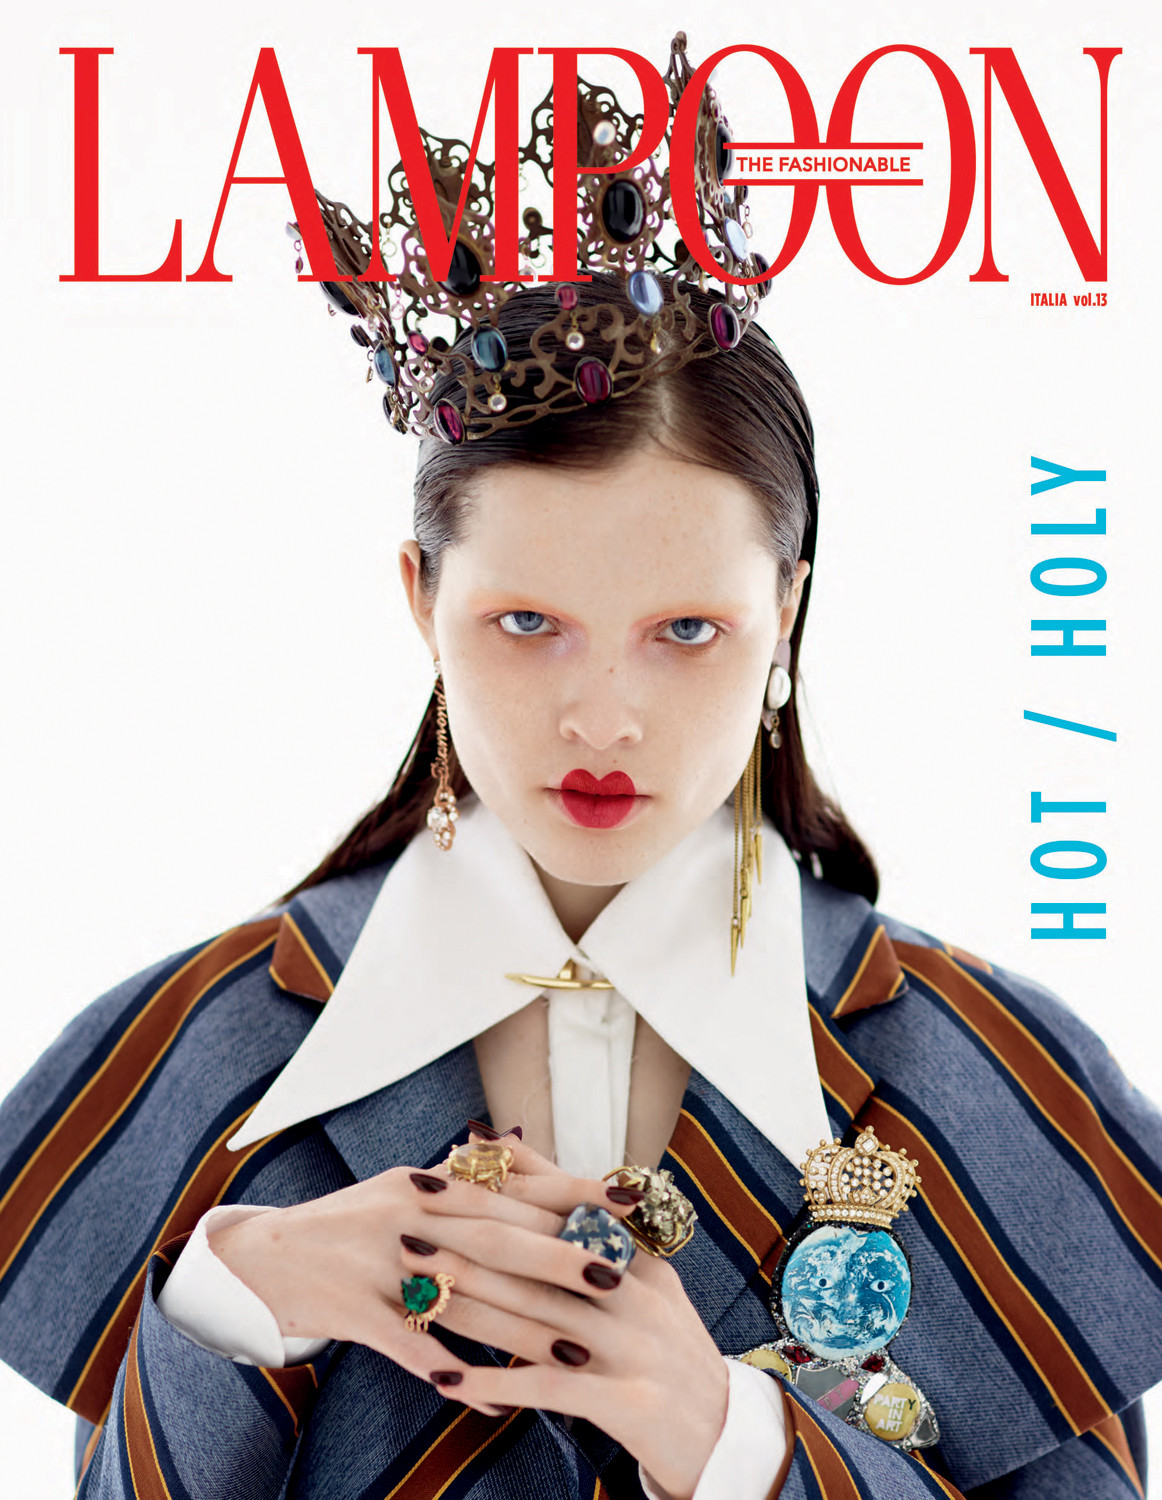 Sedona Legge by Rankin for The Fashionable Lampoon (2).jpg